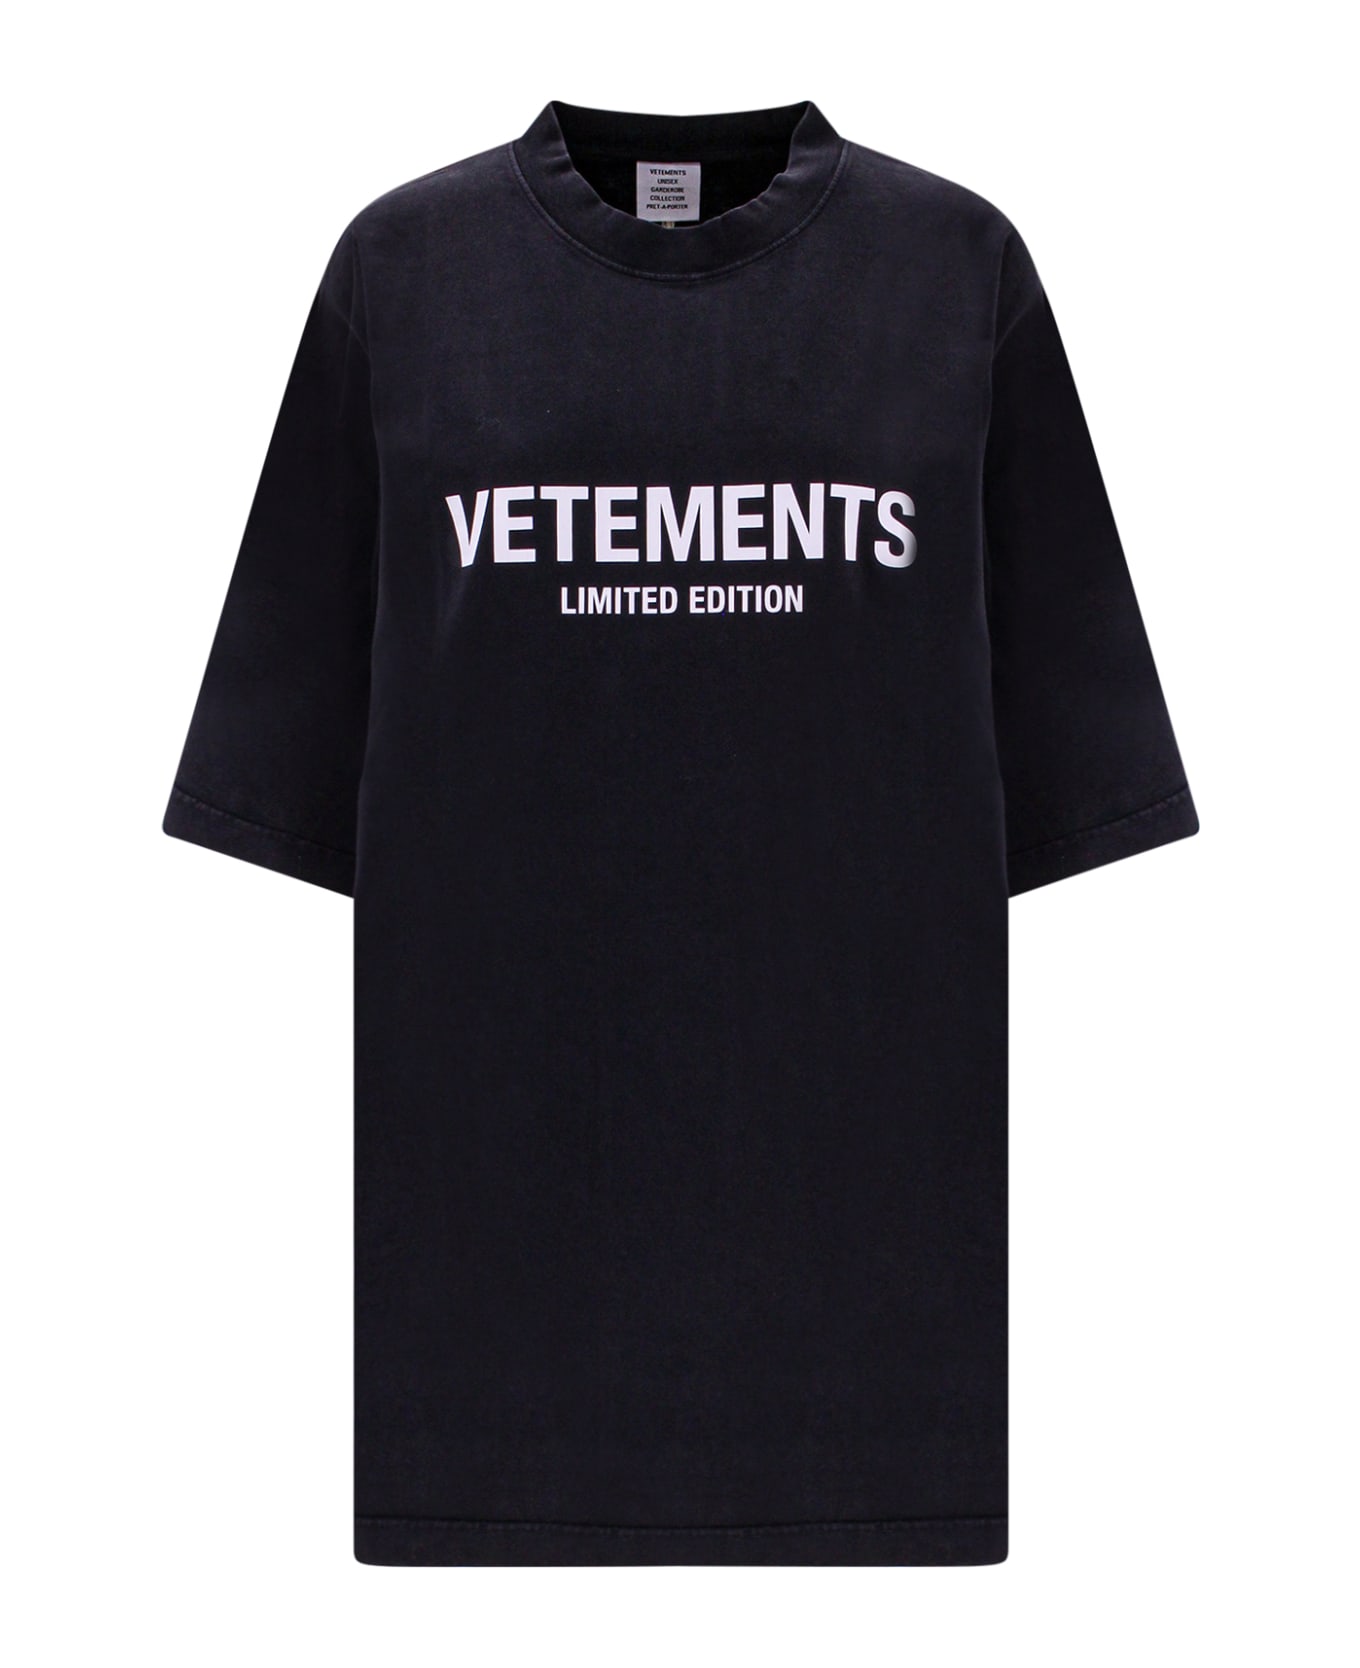 VETEMENTS T-shirt - BLACK